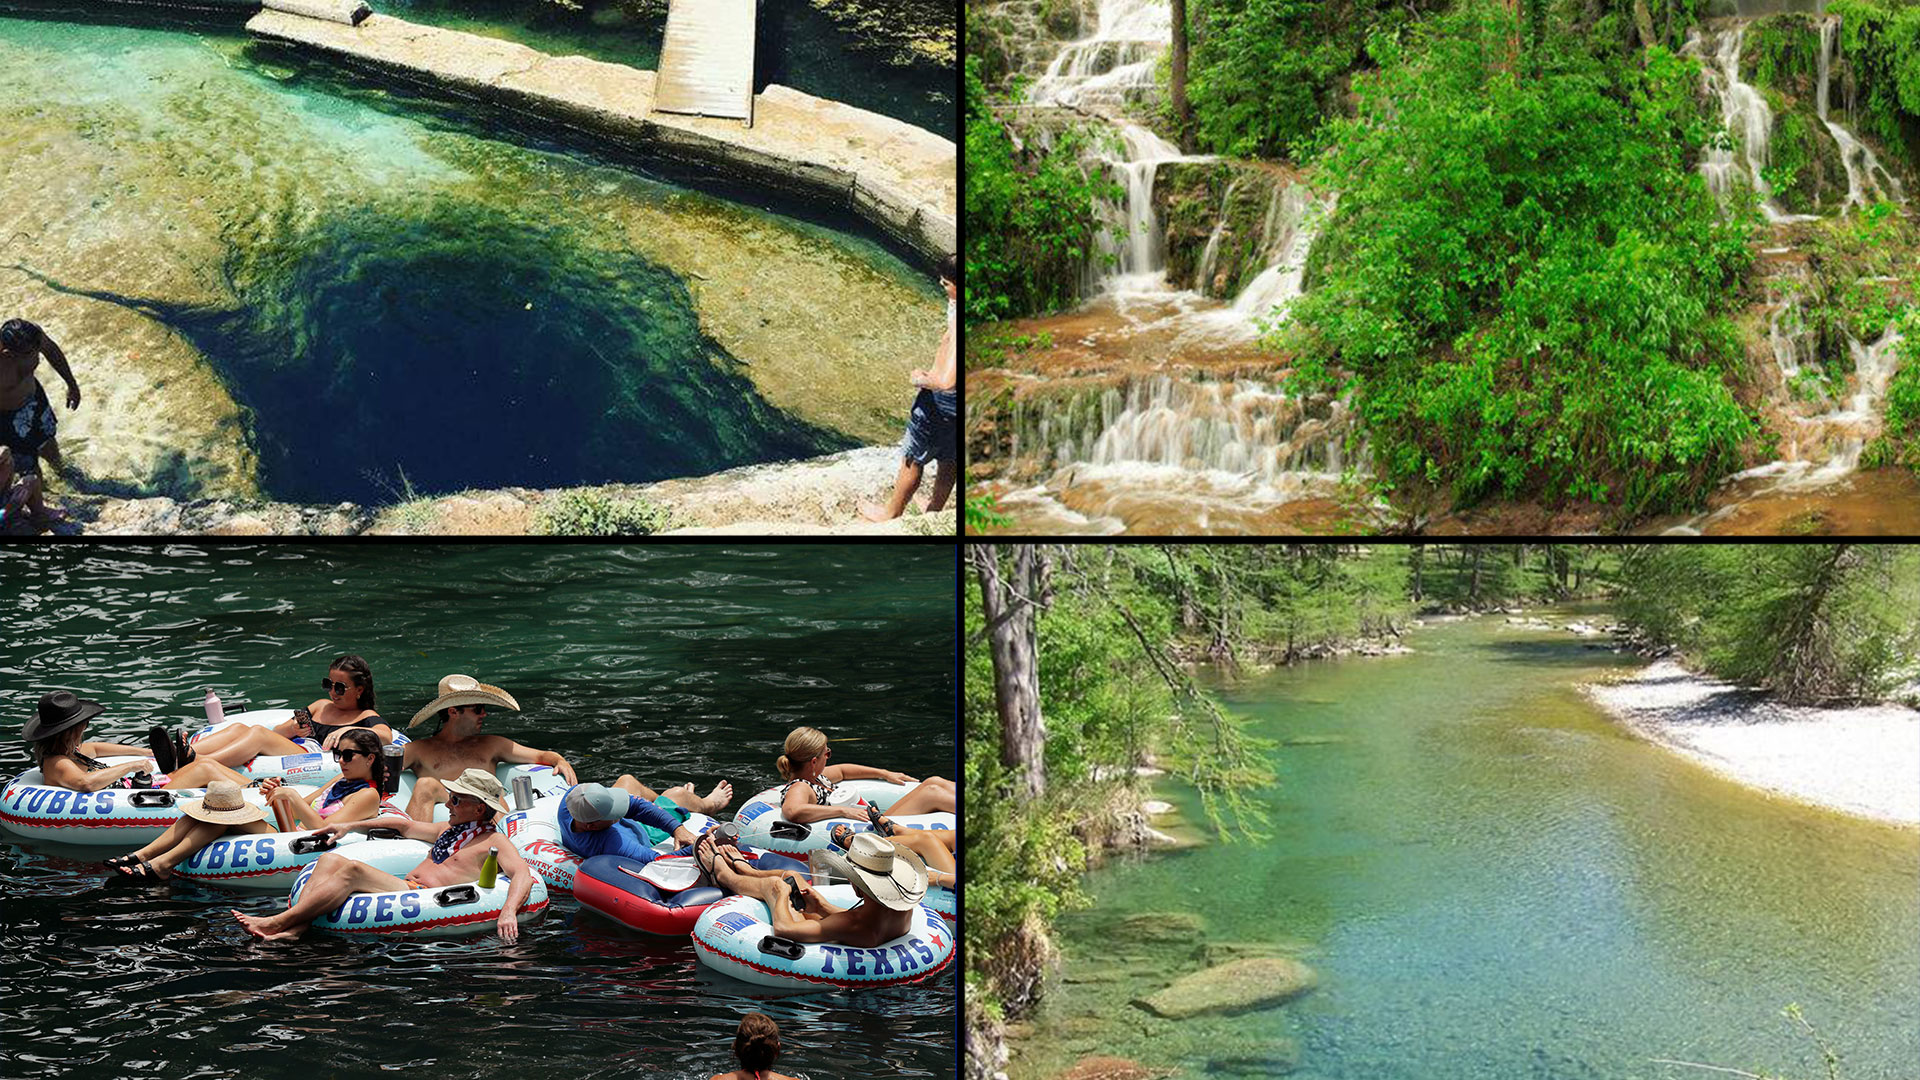 Swimming holes, lakes, rivers and waterfalls